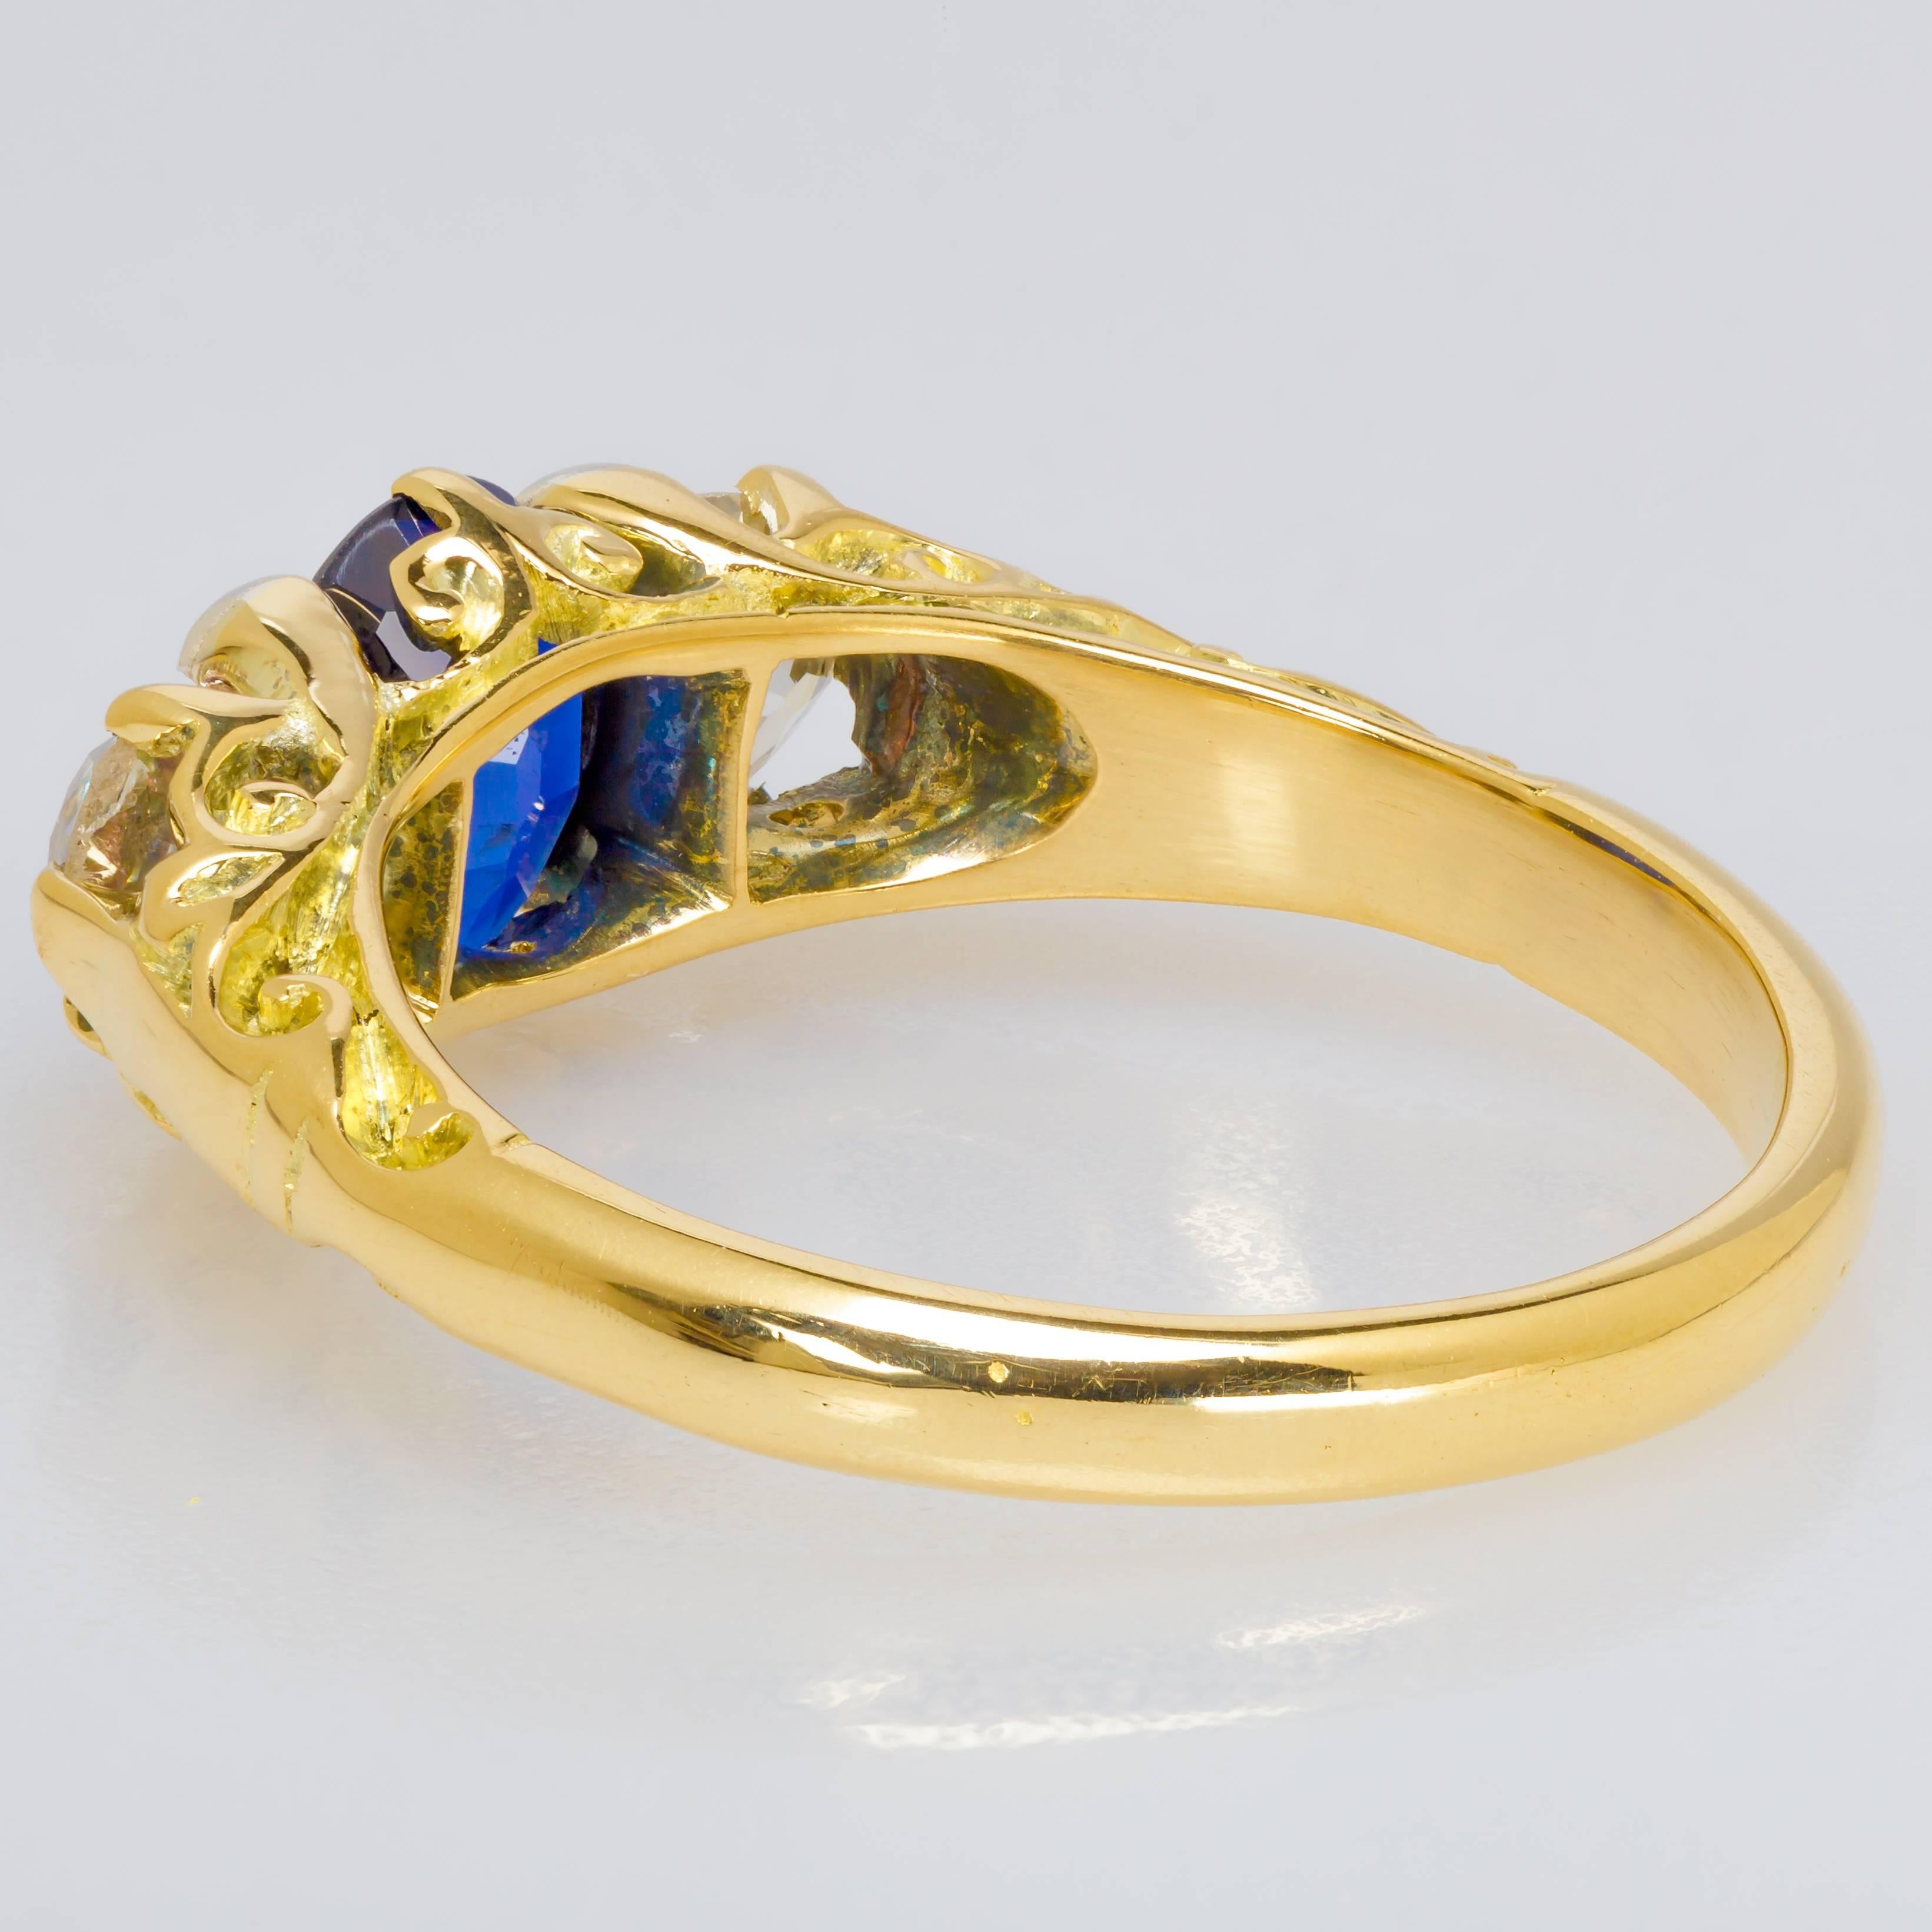 Custom-Designed 1.00 ct. Sapphire, Diamond & 18k Yellow Gold Ring For Sale 1